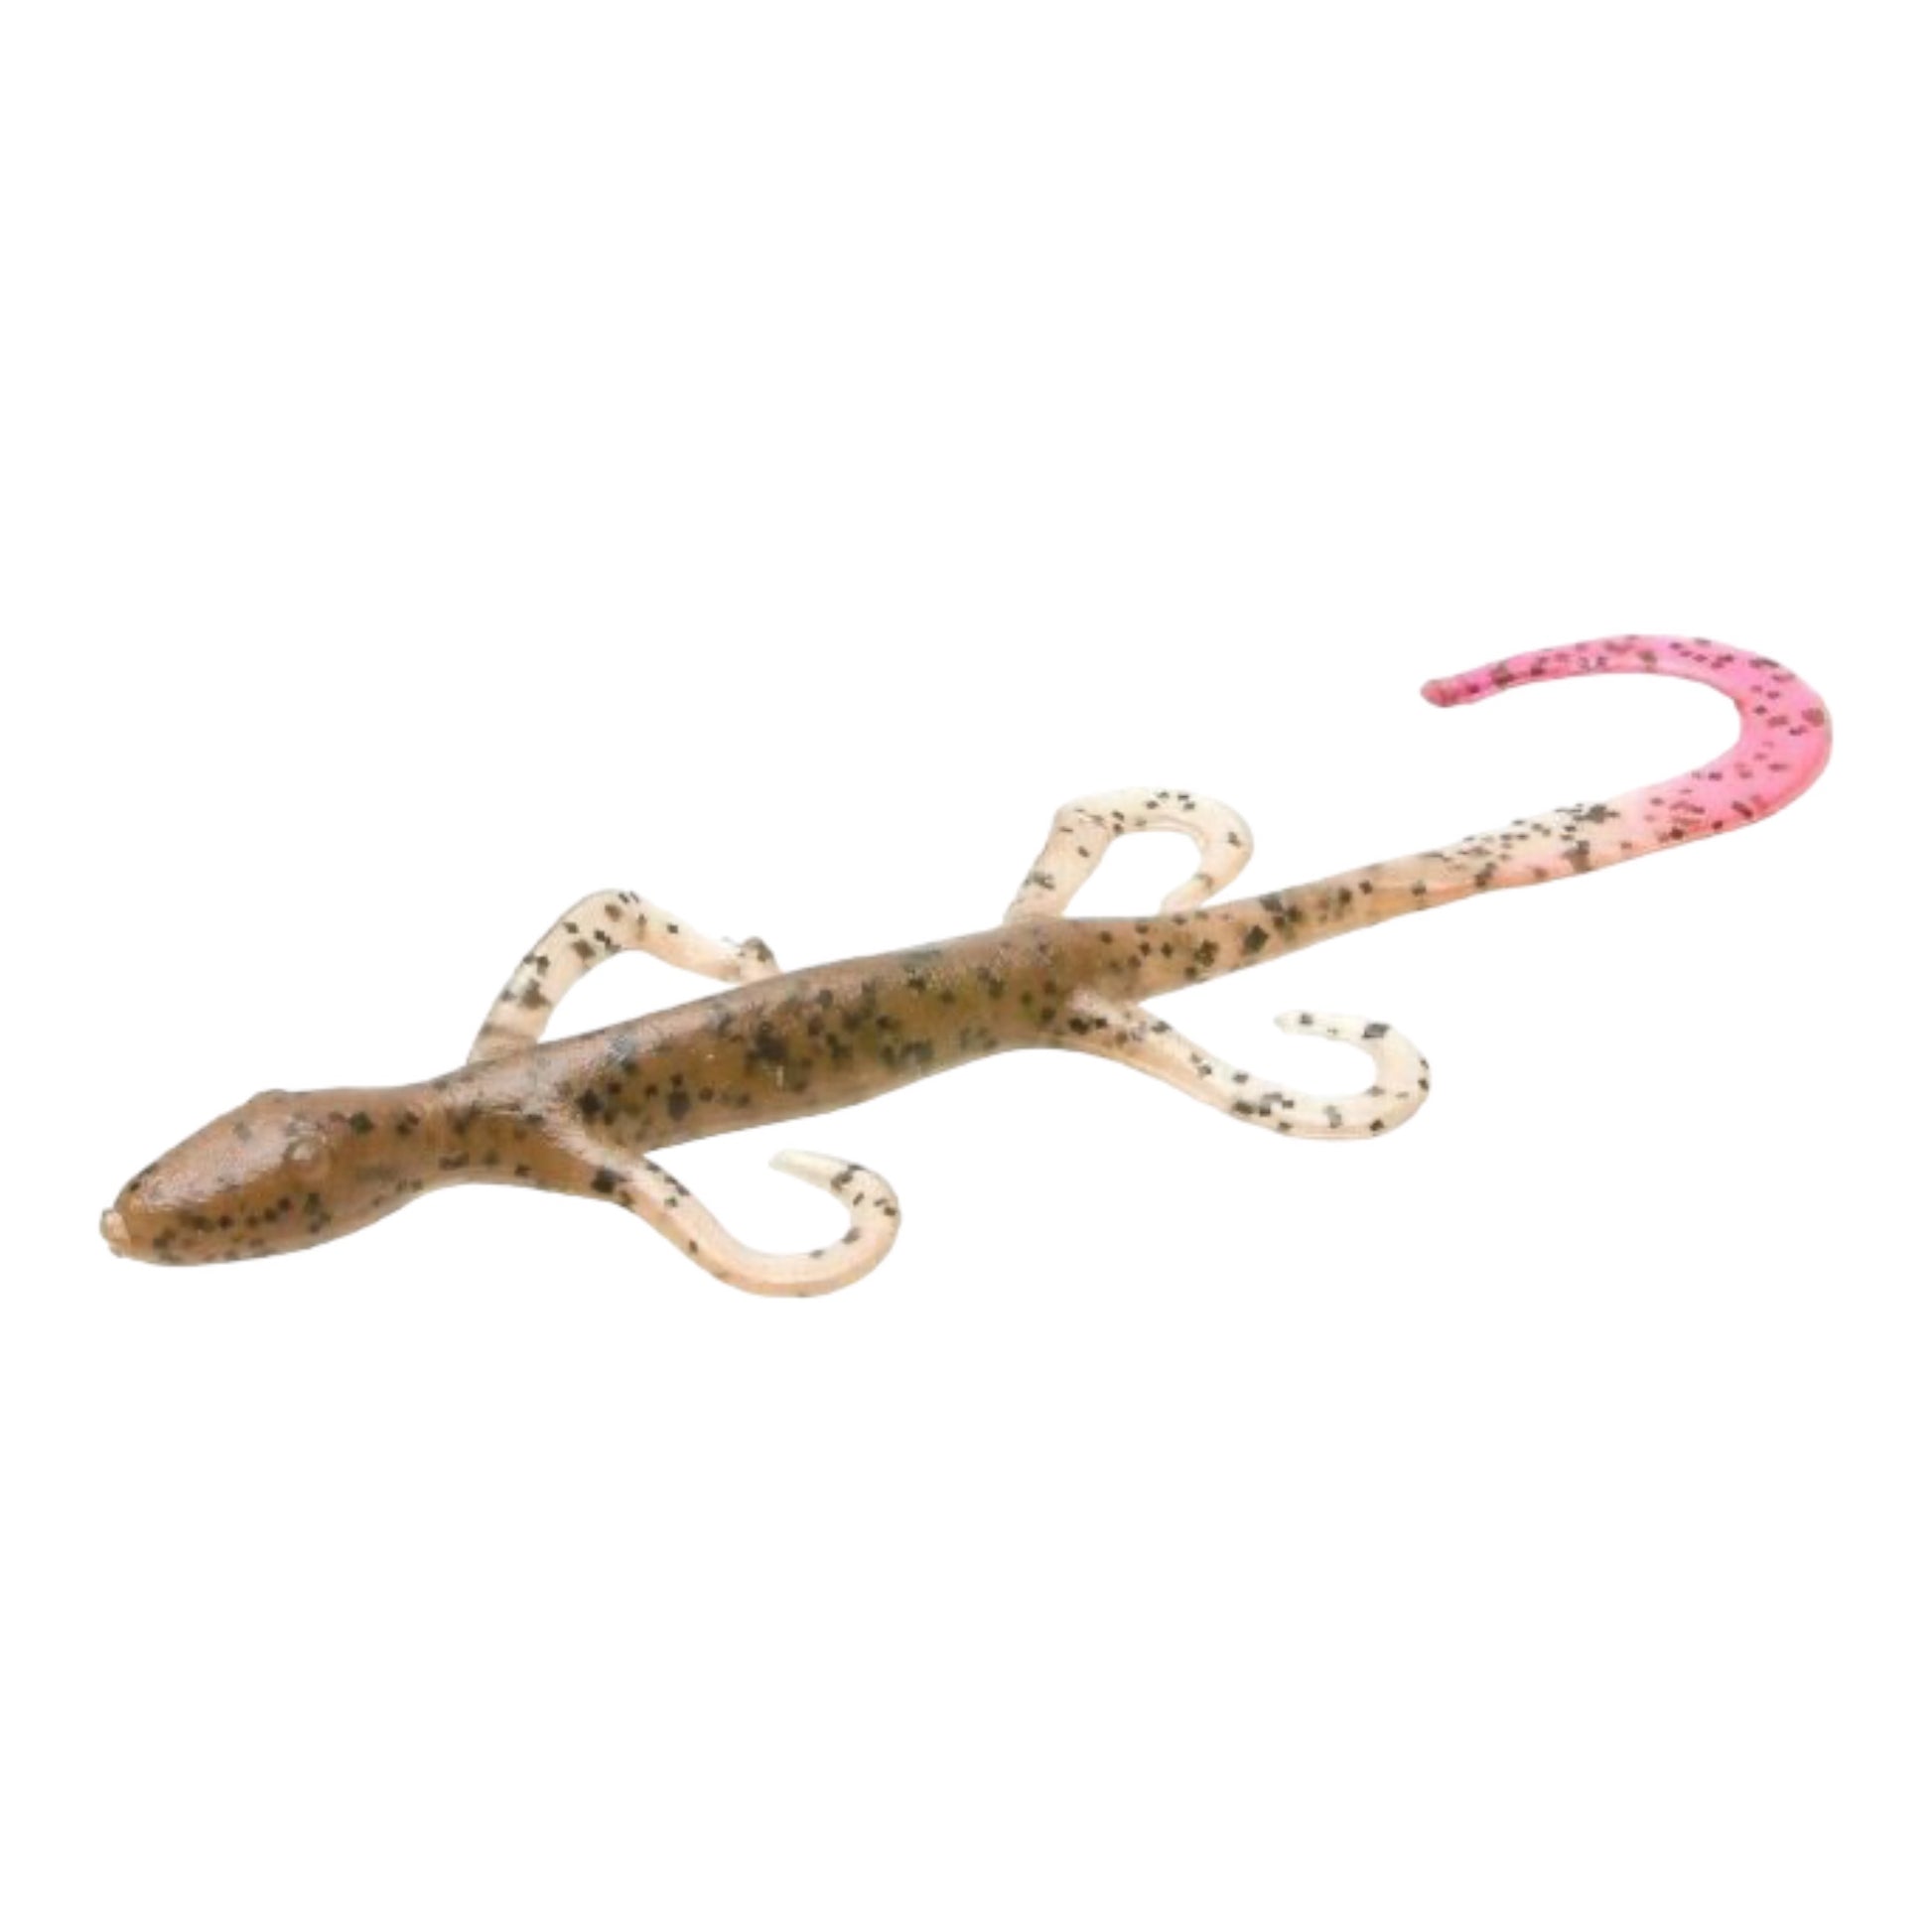 Zoom Soft Plastic Salty Lizard – Three Rivers Tackle